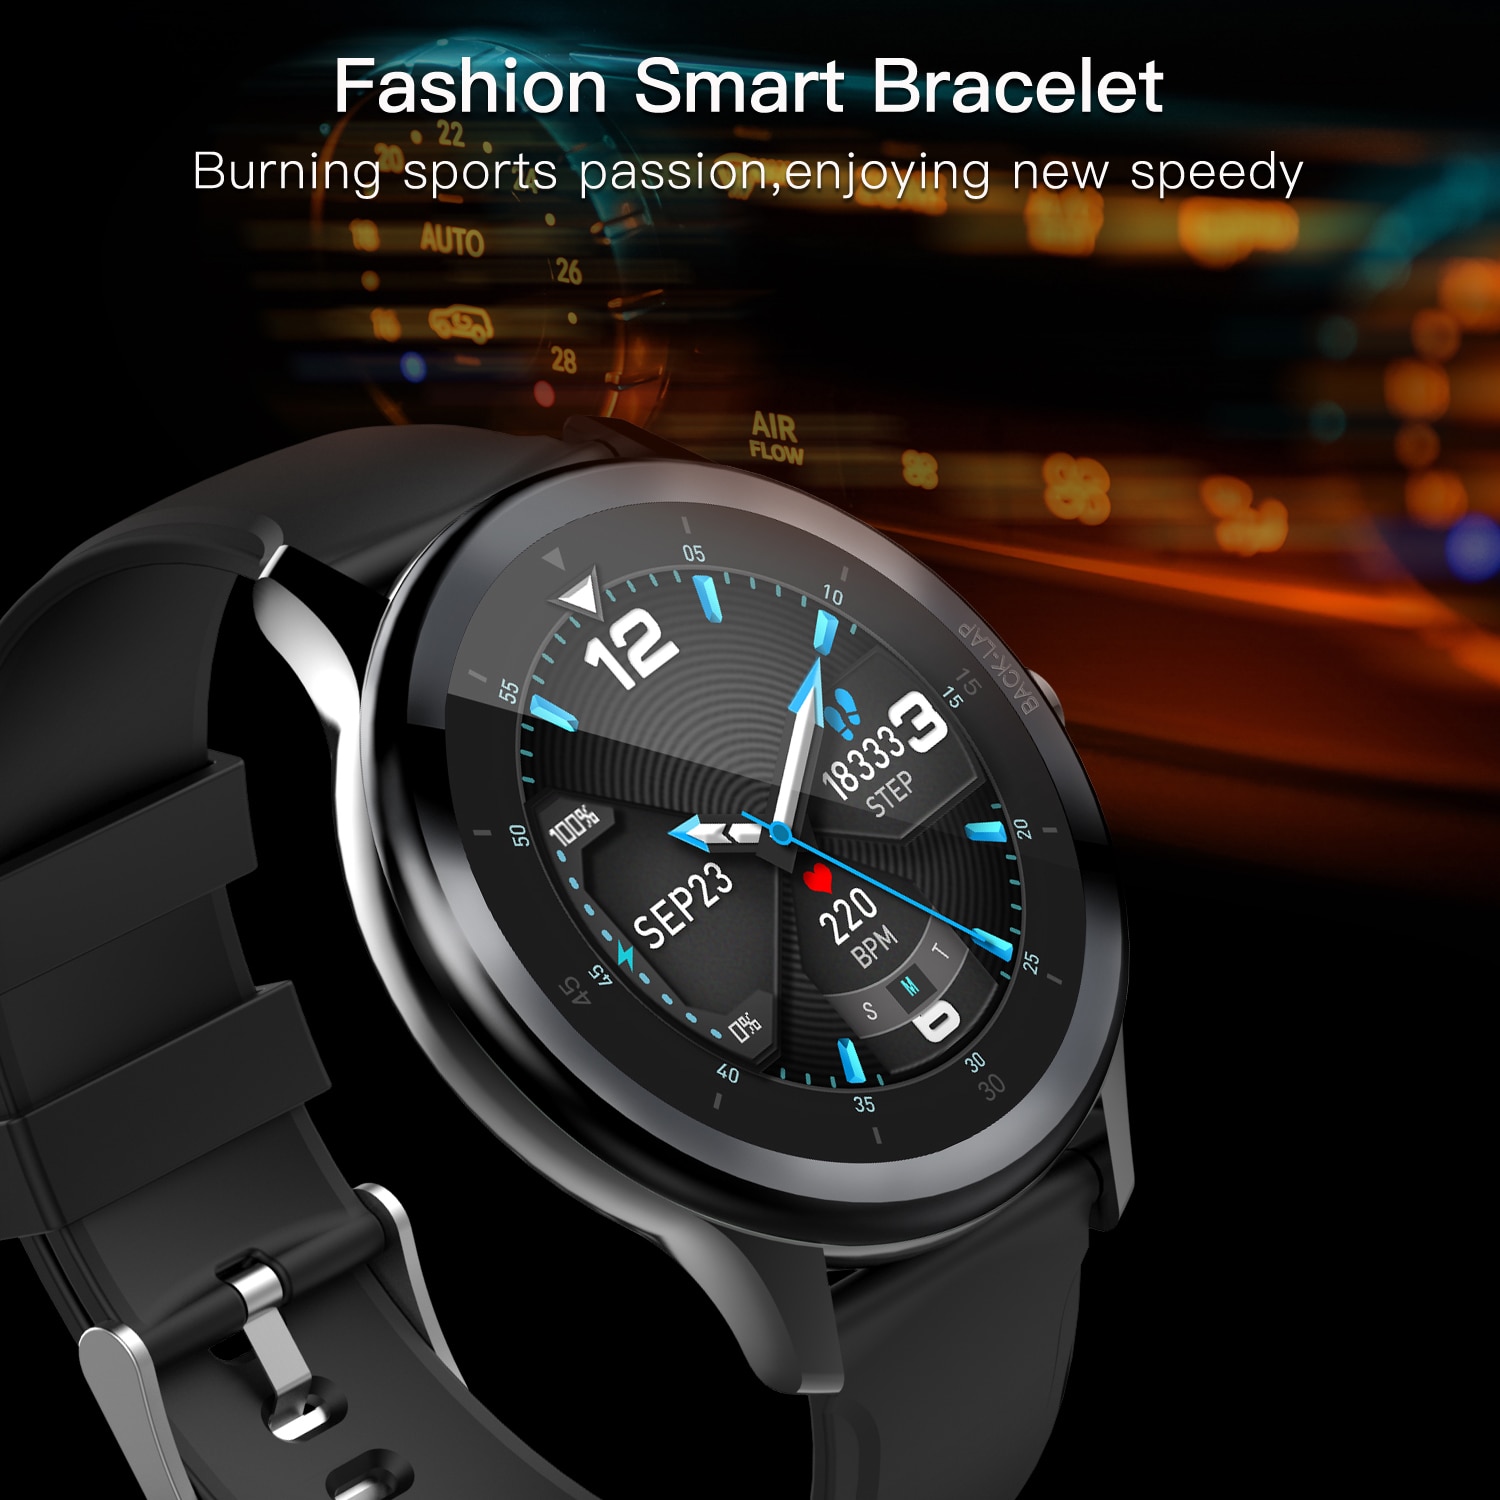 G28 Smart Horloge Bluetooth Smart Armband Smartwatch Fitness Tracker Hartslagmeter IP68 Waterdichte Slaap Monitor Sport Horloge